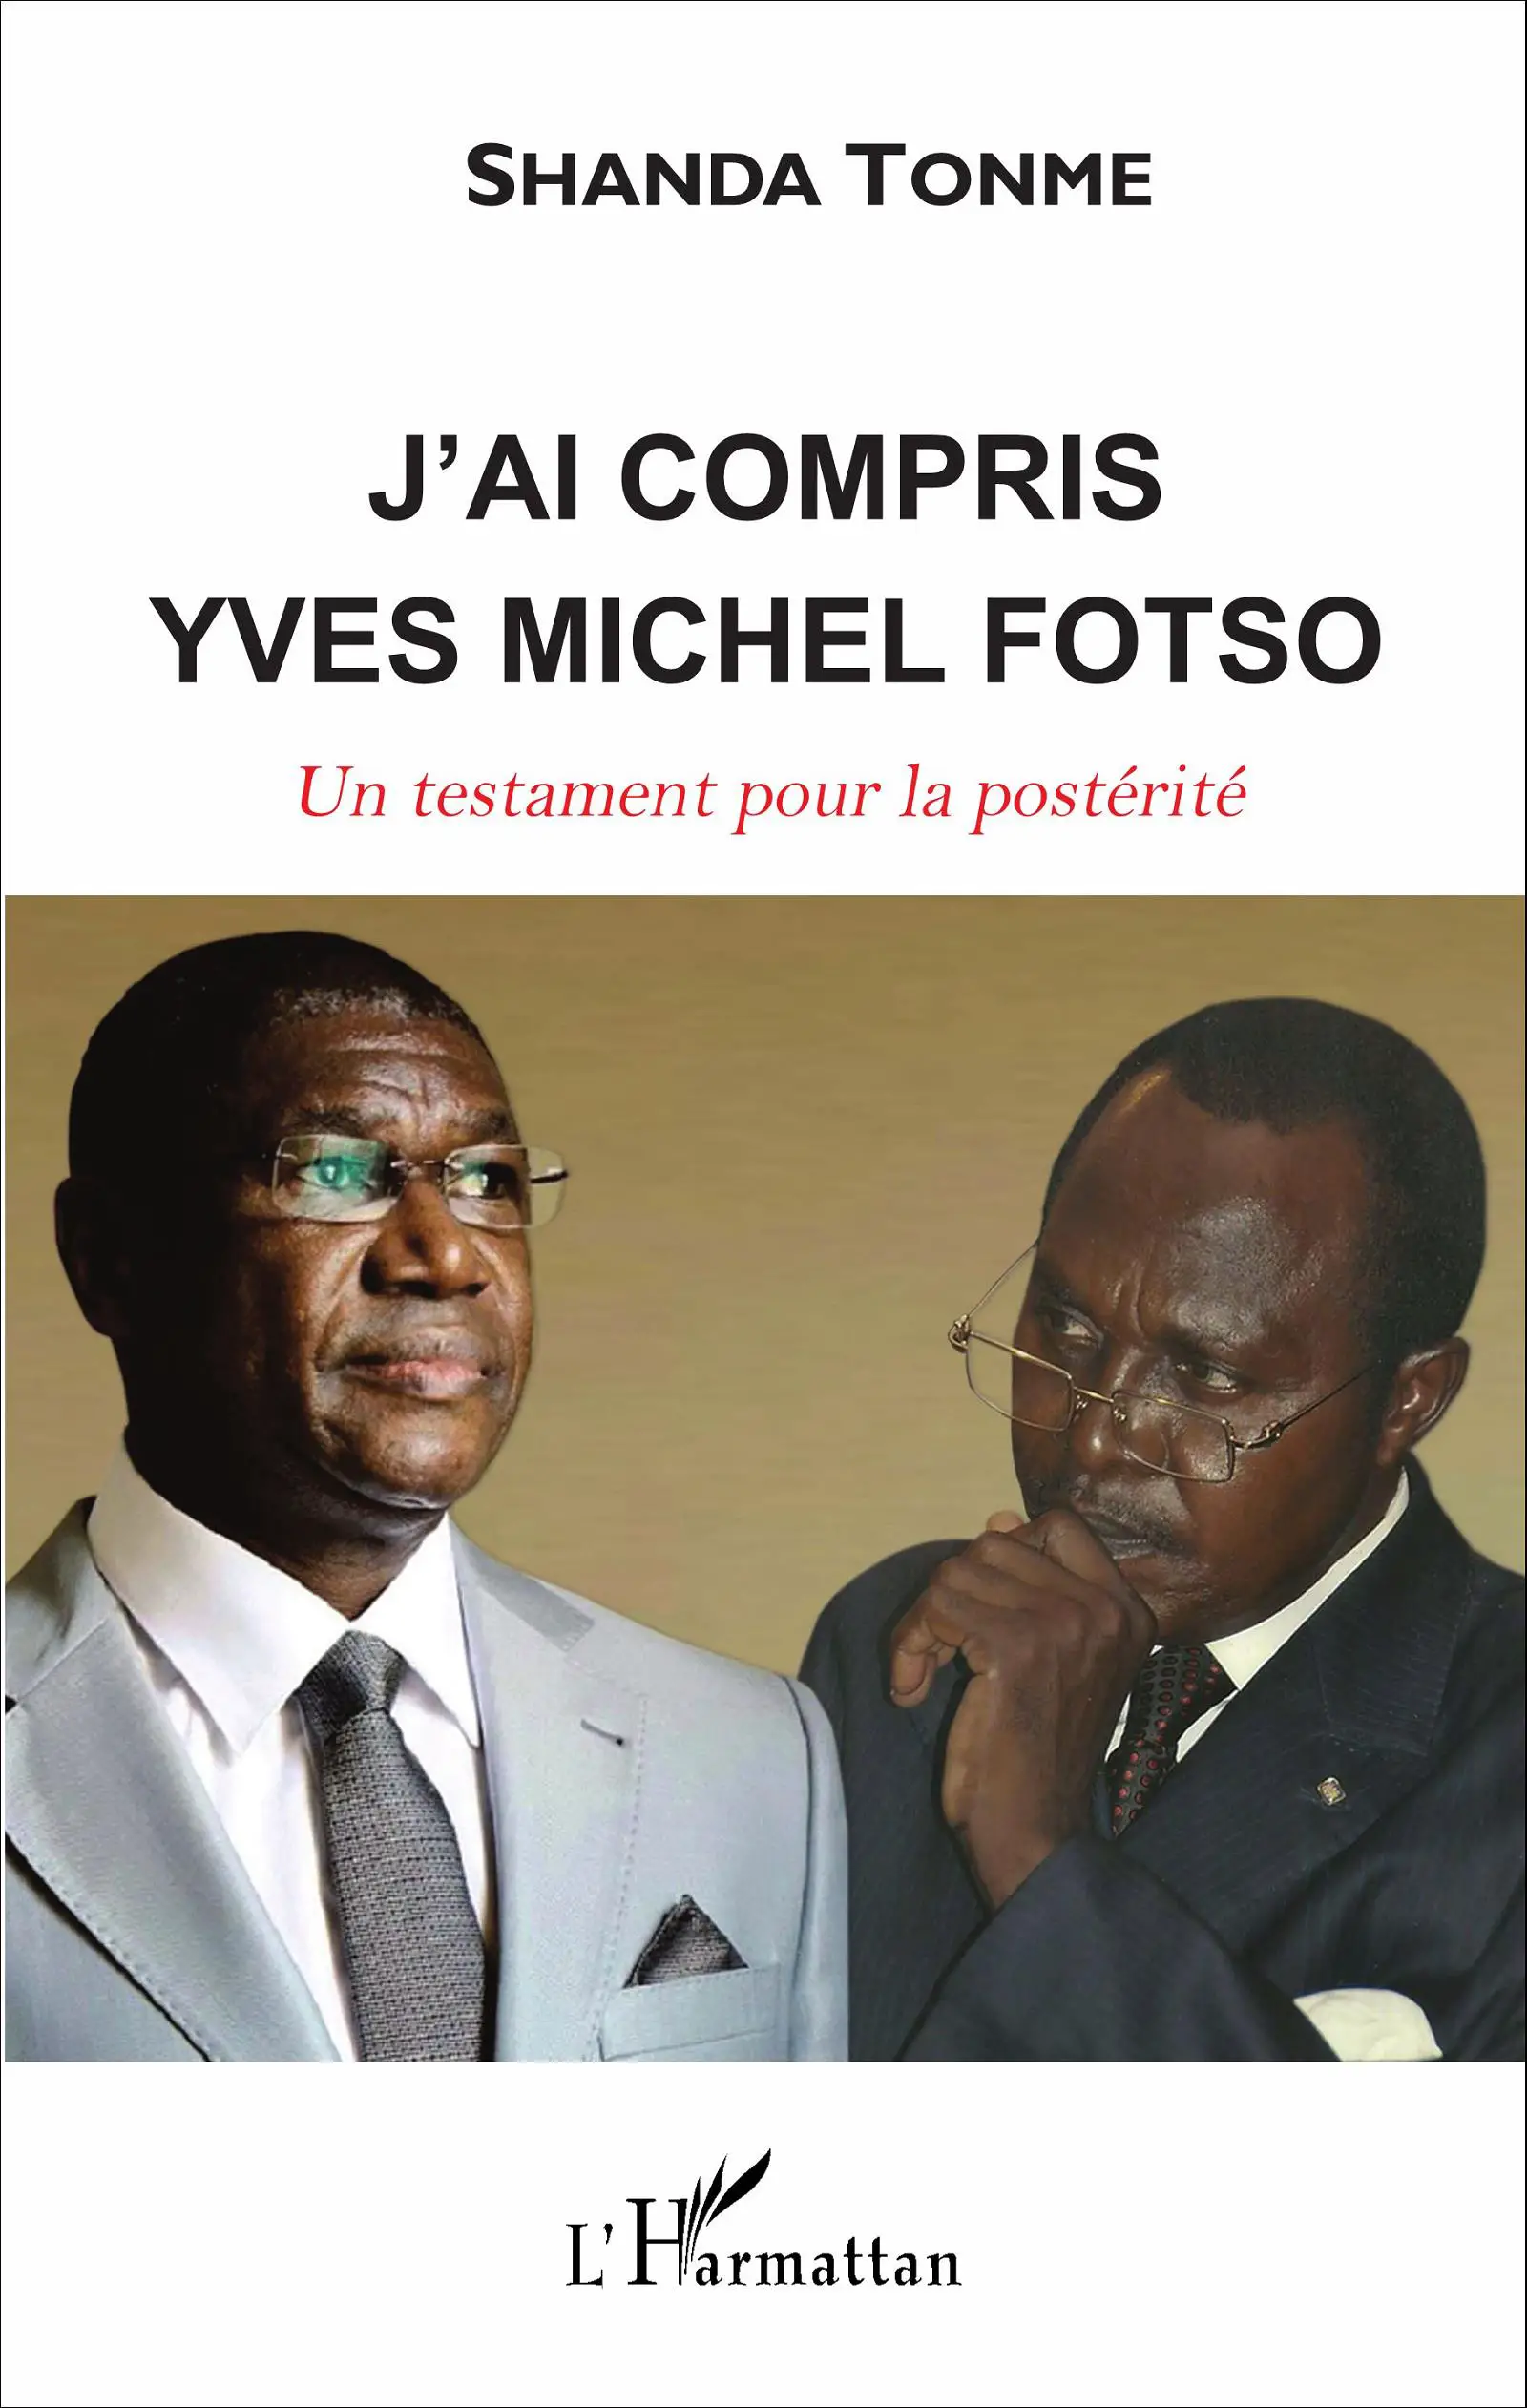 Cameroun:« YVES MICHEL FOTSO N’EST QU’UN SIMPLE DELINQUANT »!